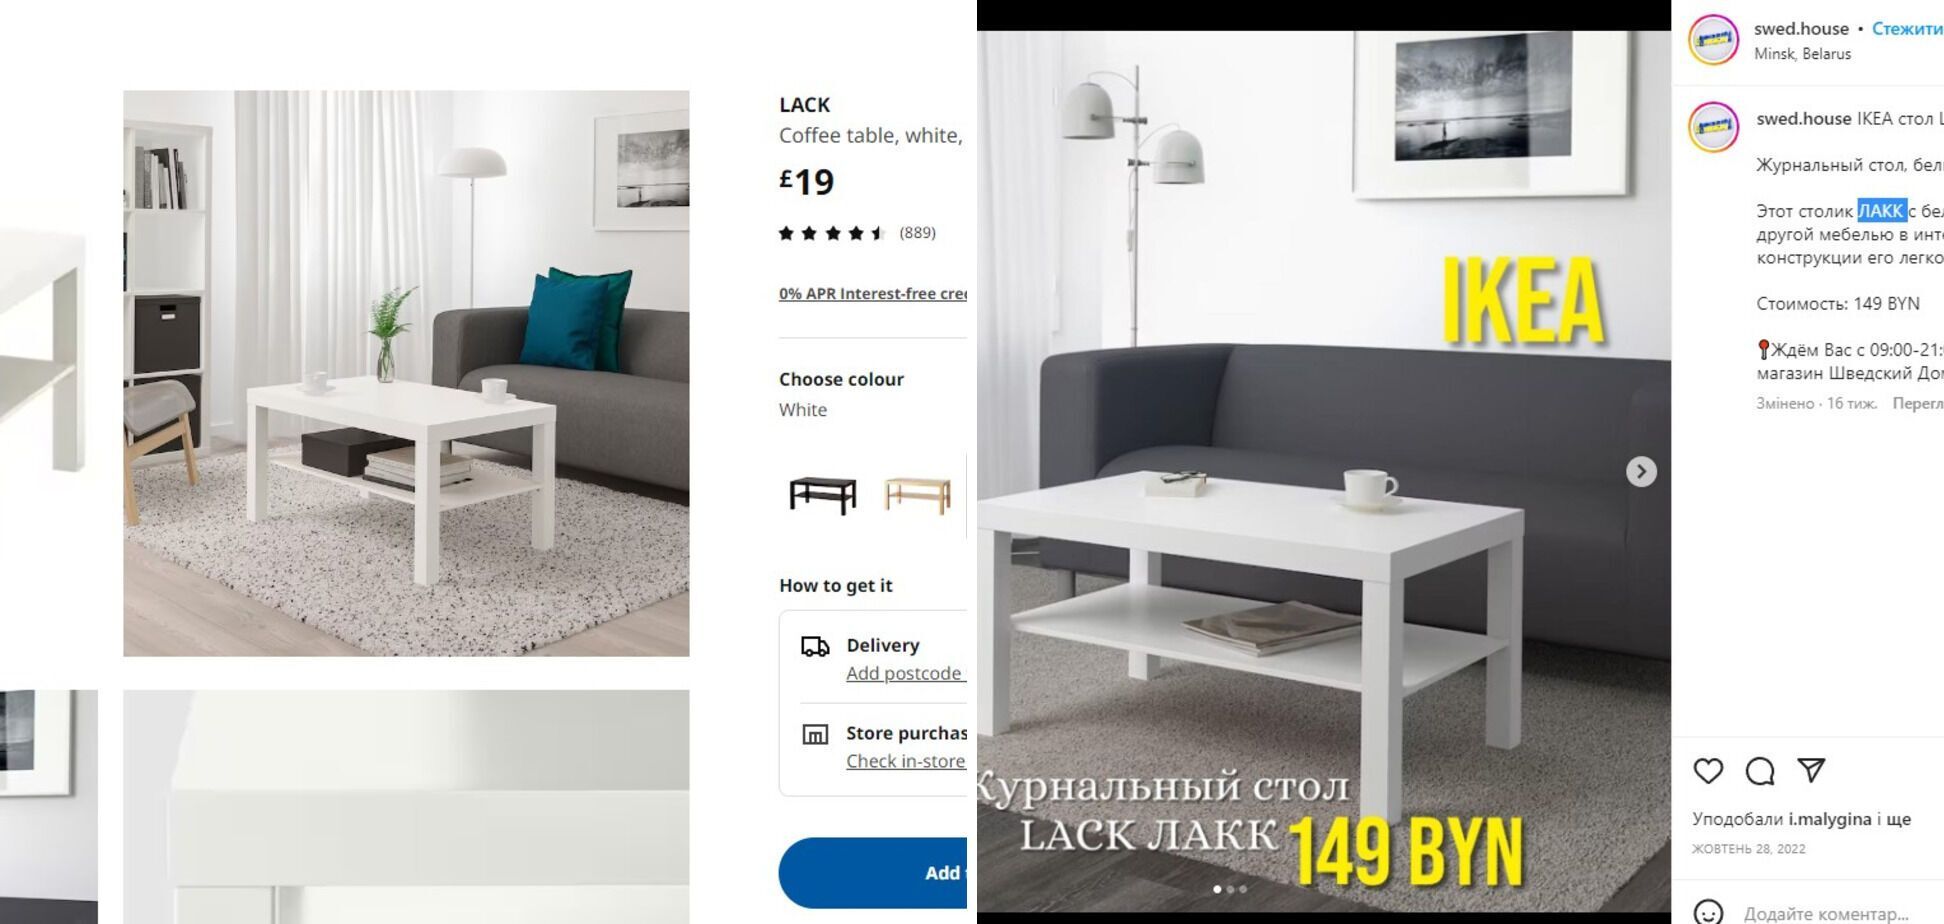 В IKEA дешевле